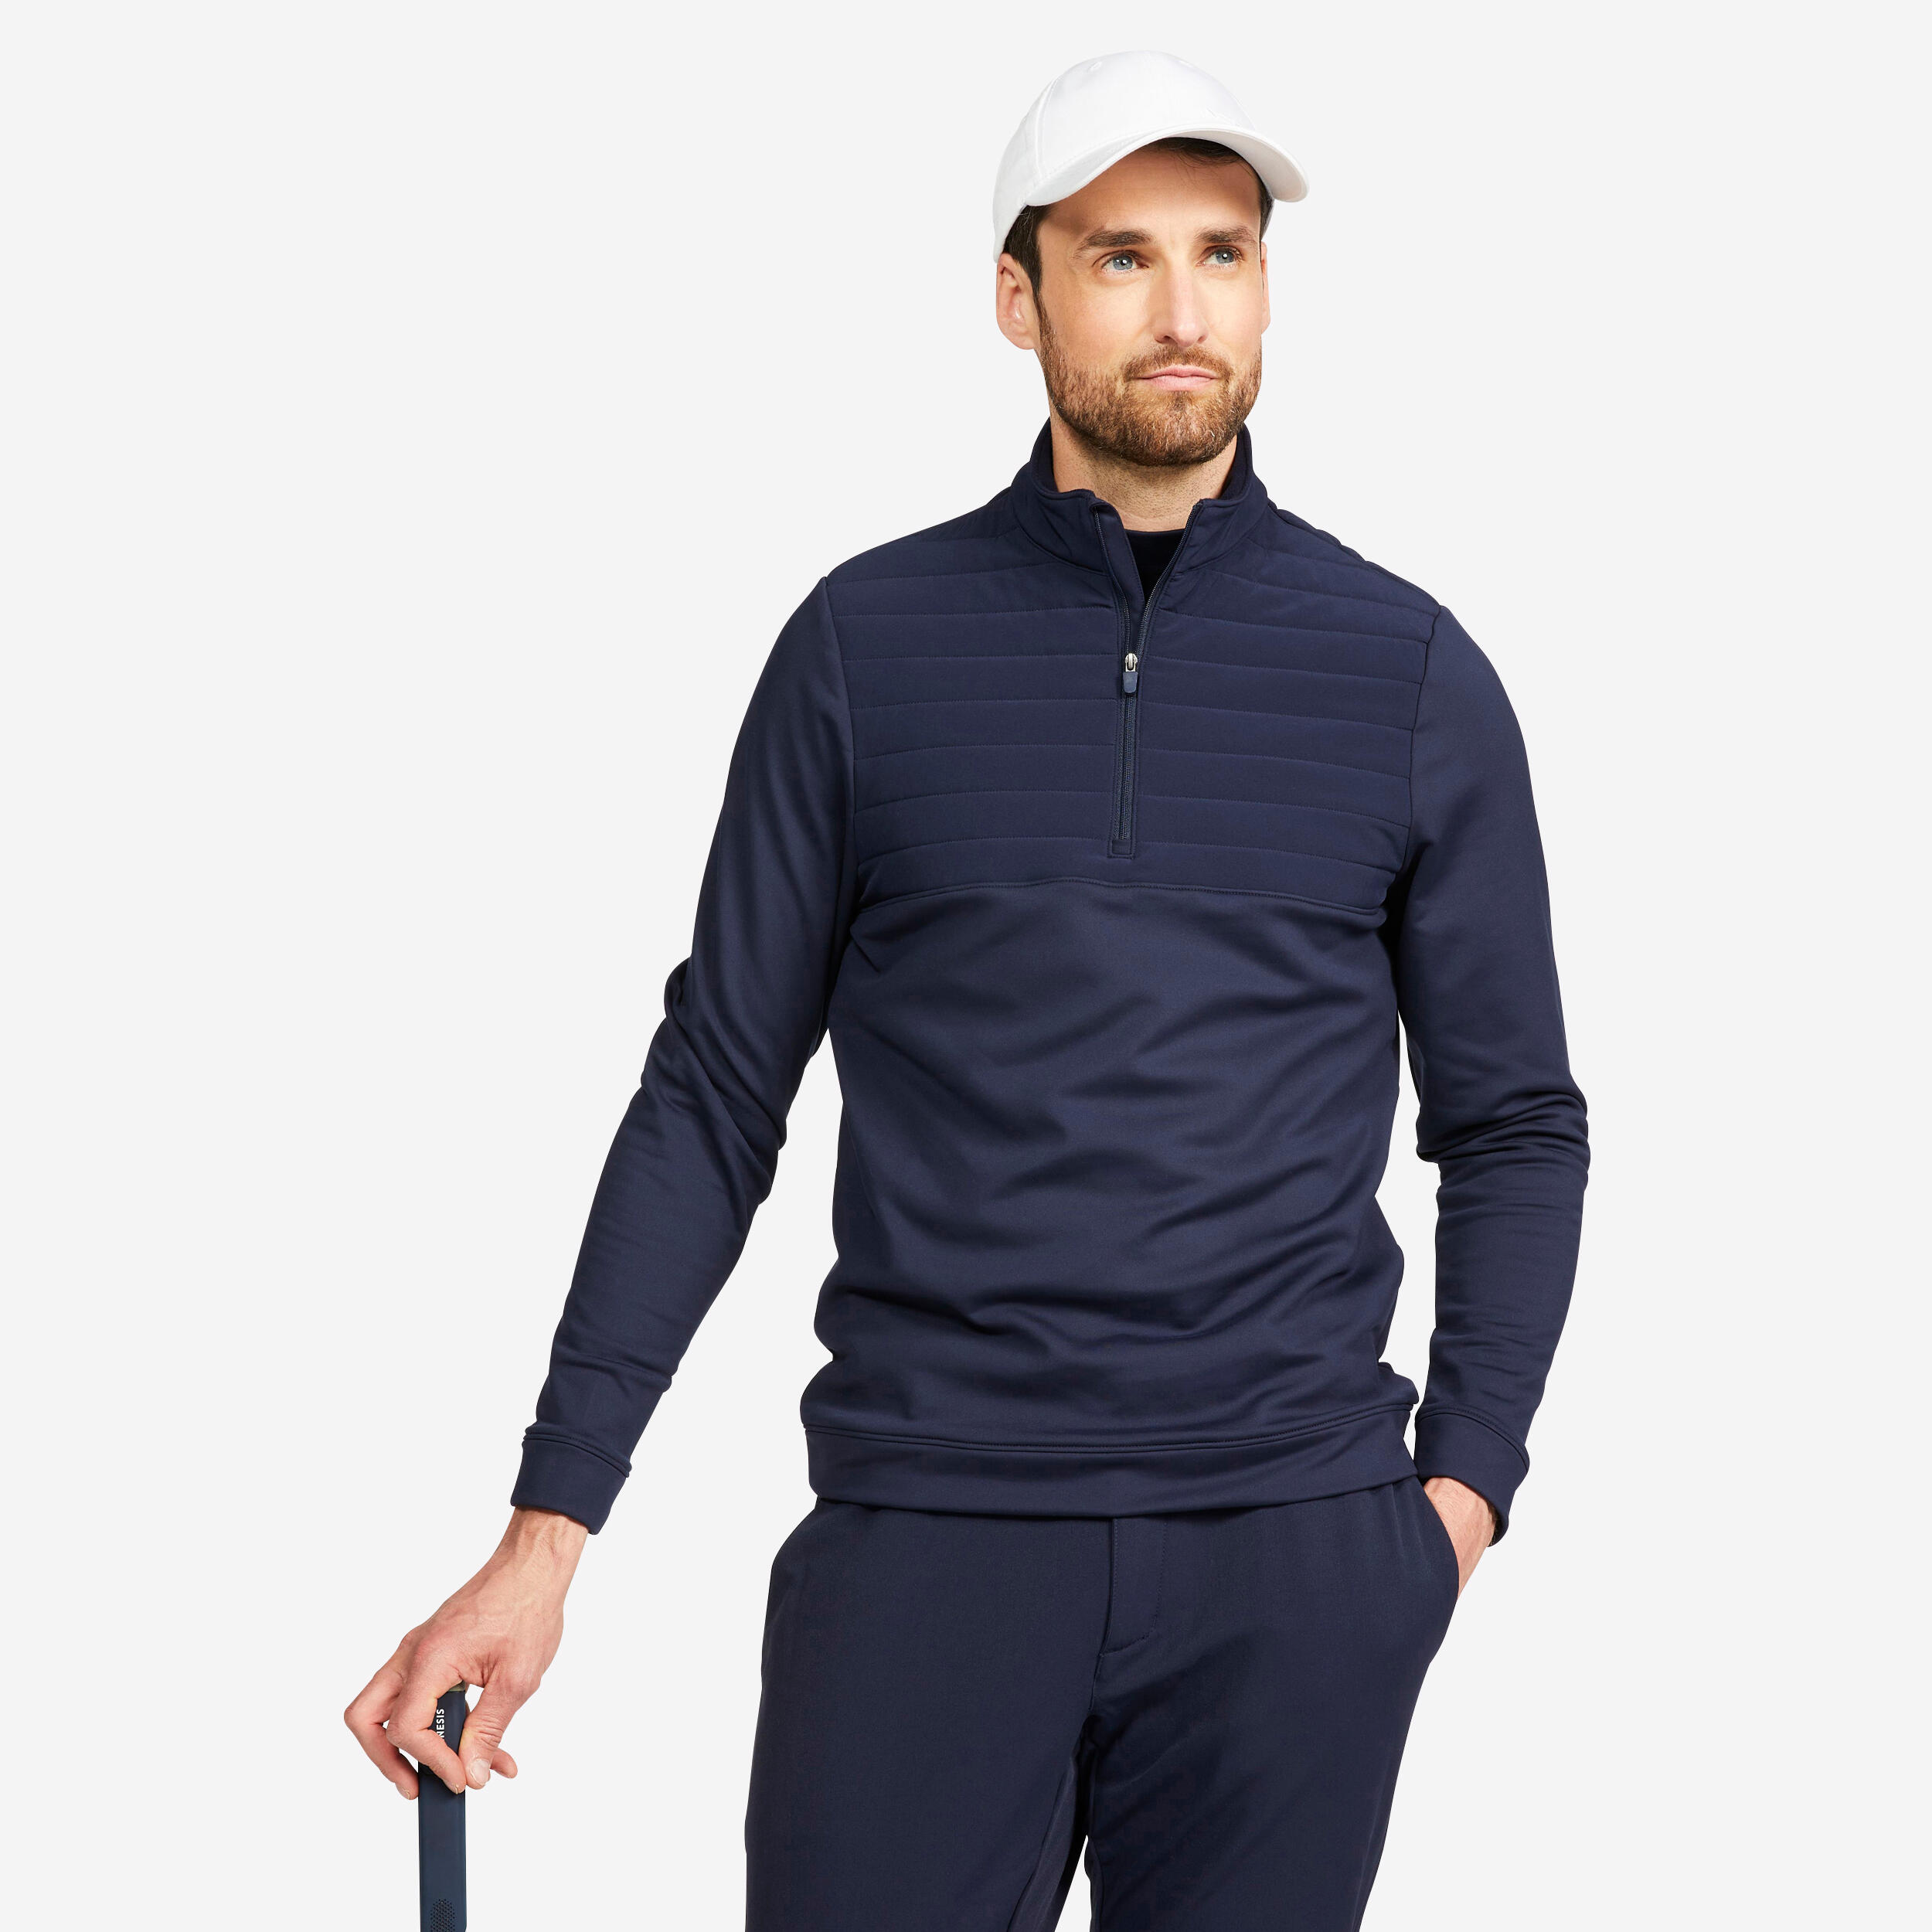 INESIS Men's golf sweatshirt - CW500 navy blue